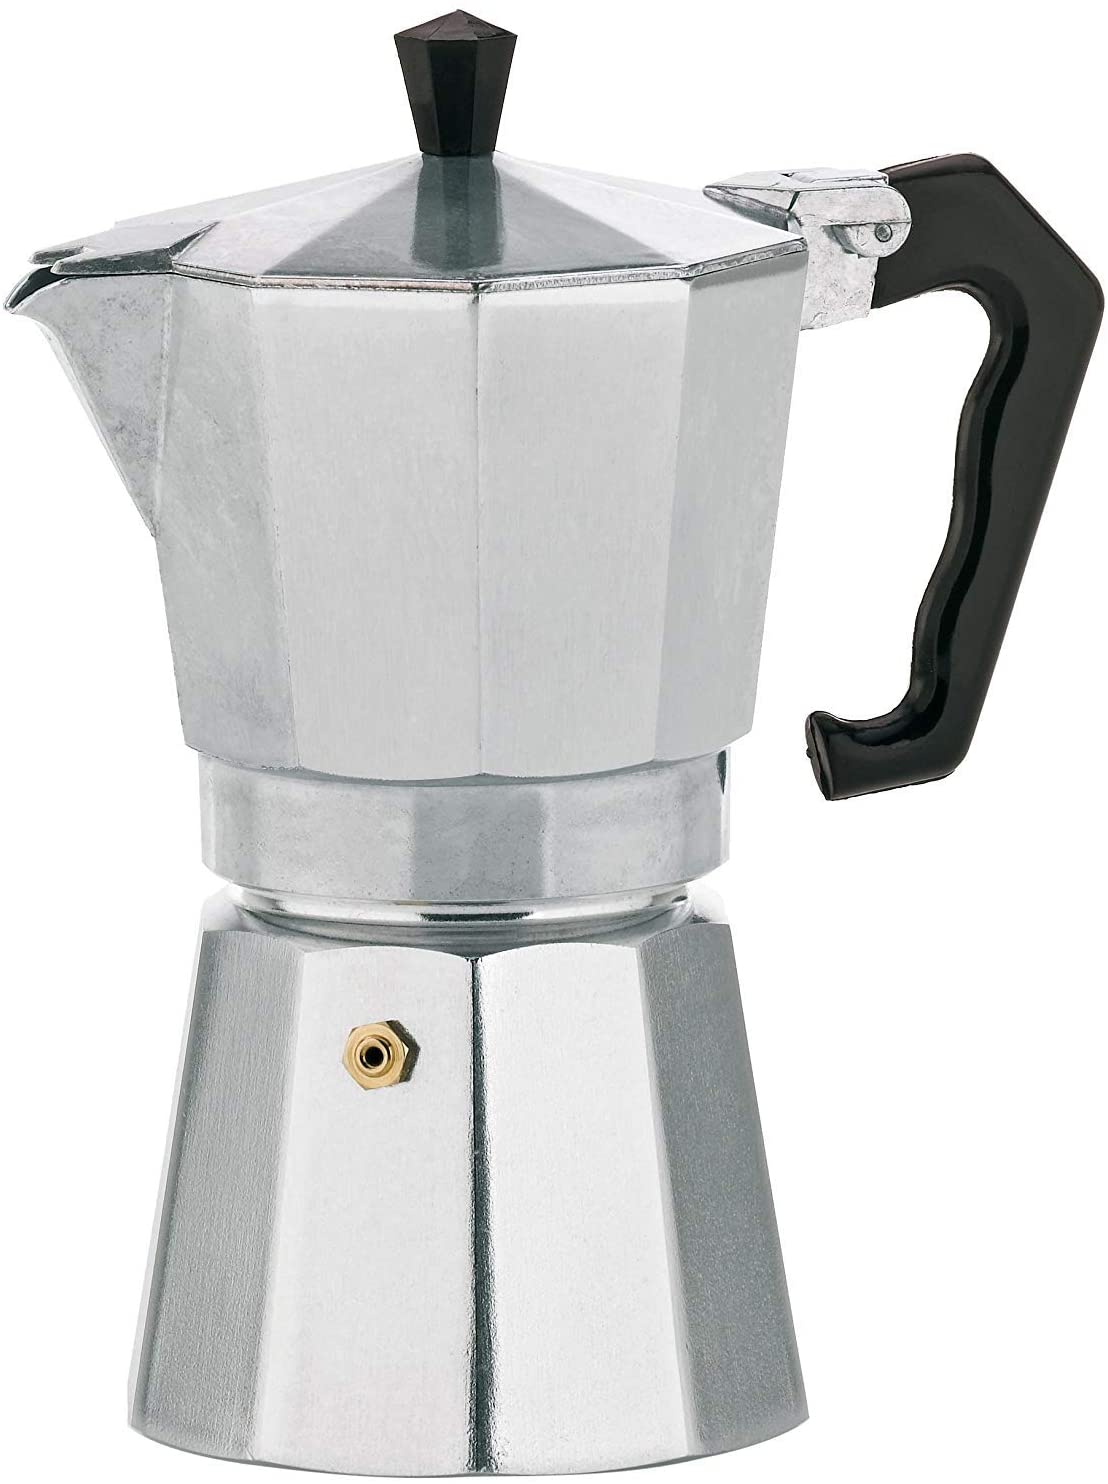 Kela Italia 10590 Espresso Maker for 3 Cups